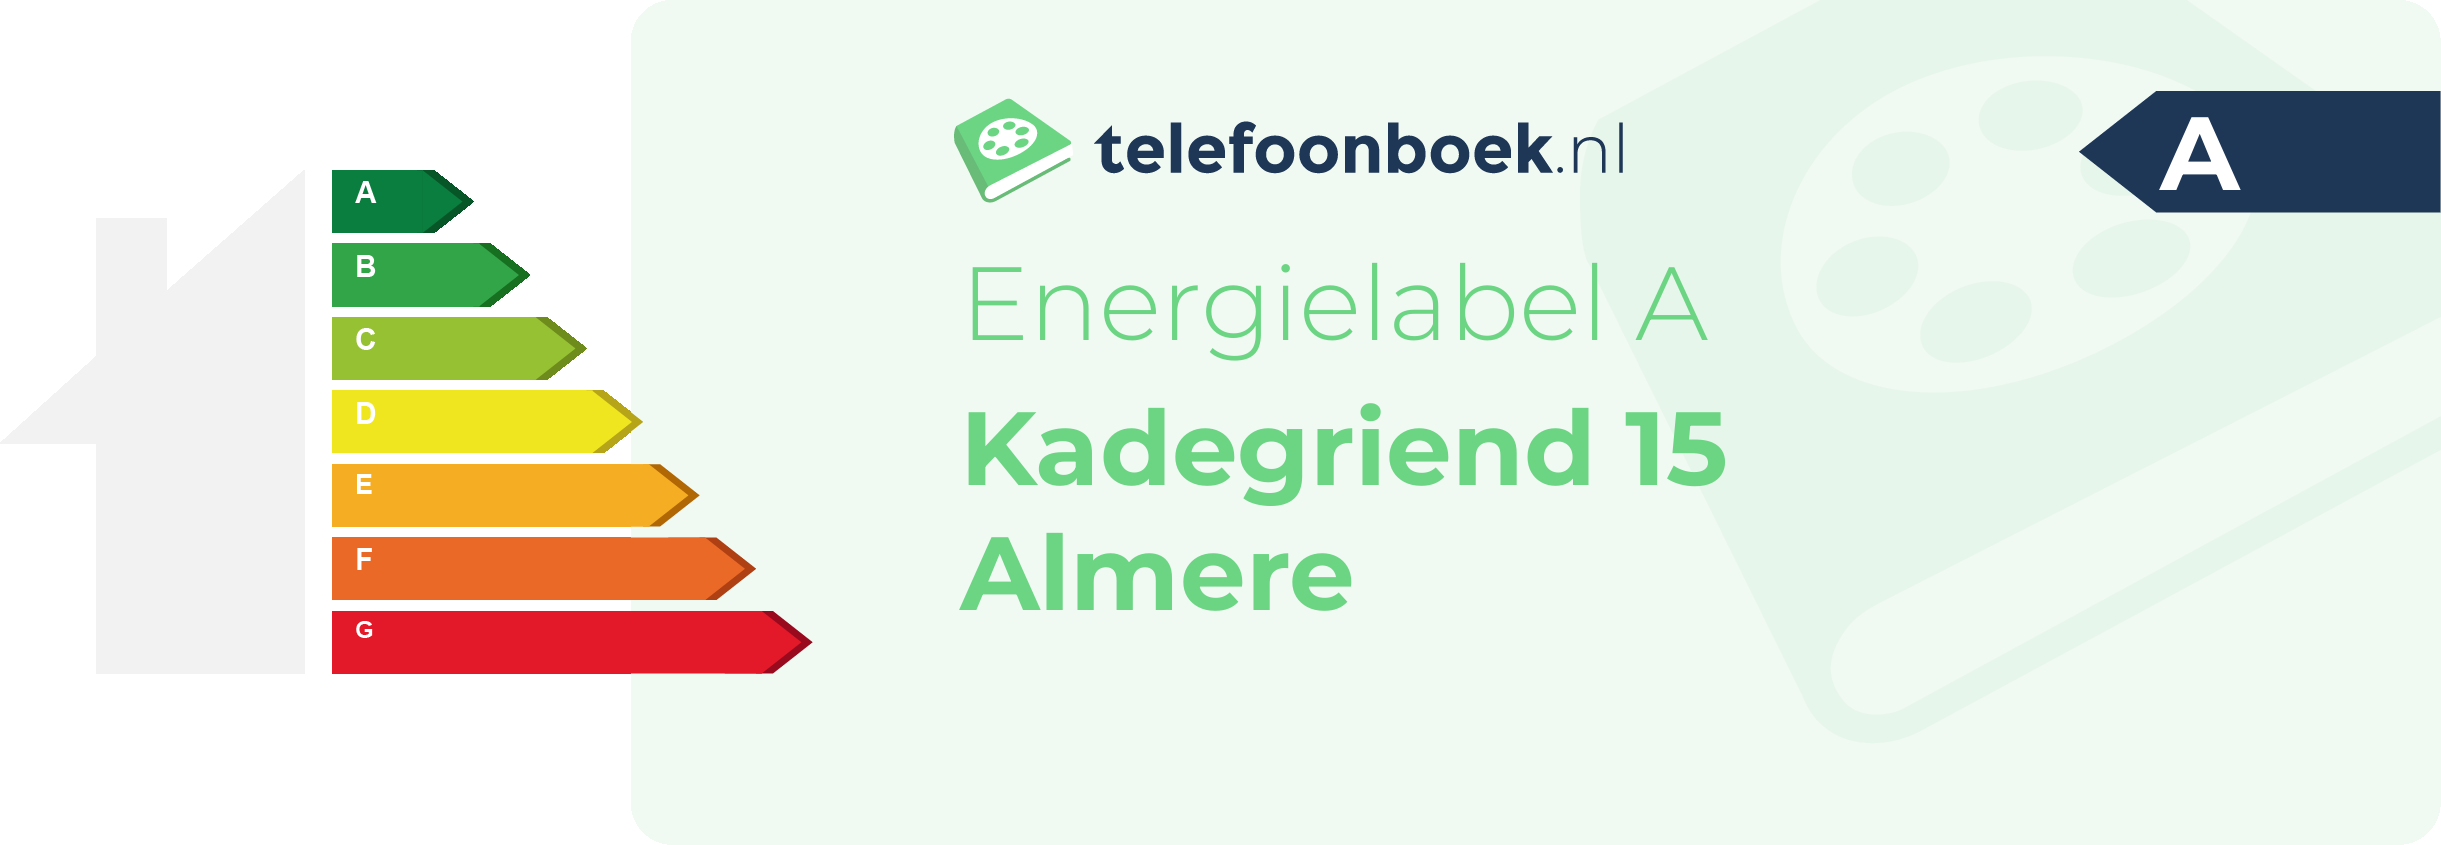 Energielabel Kadegriend 15 Almere